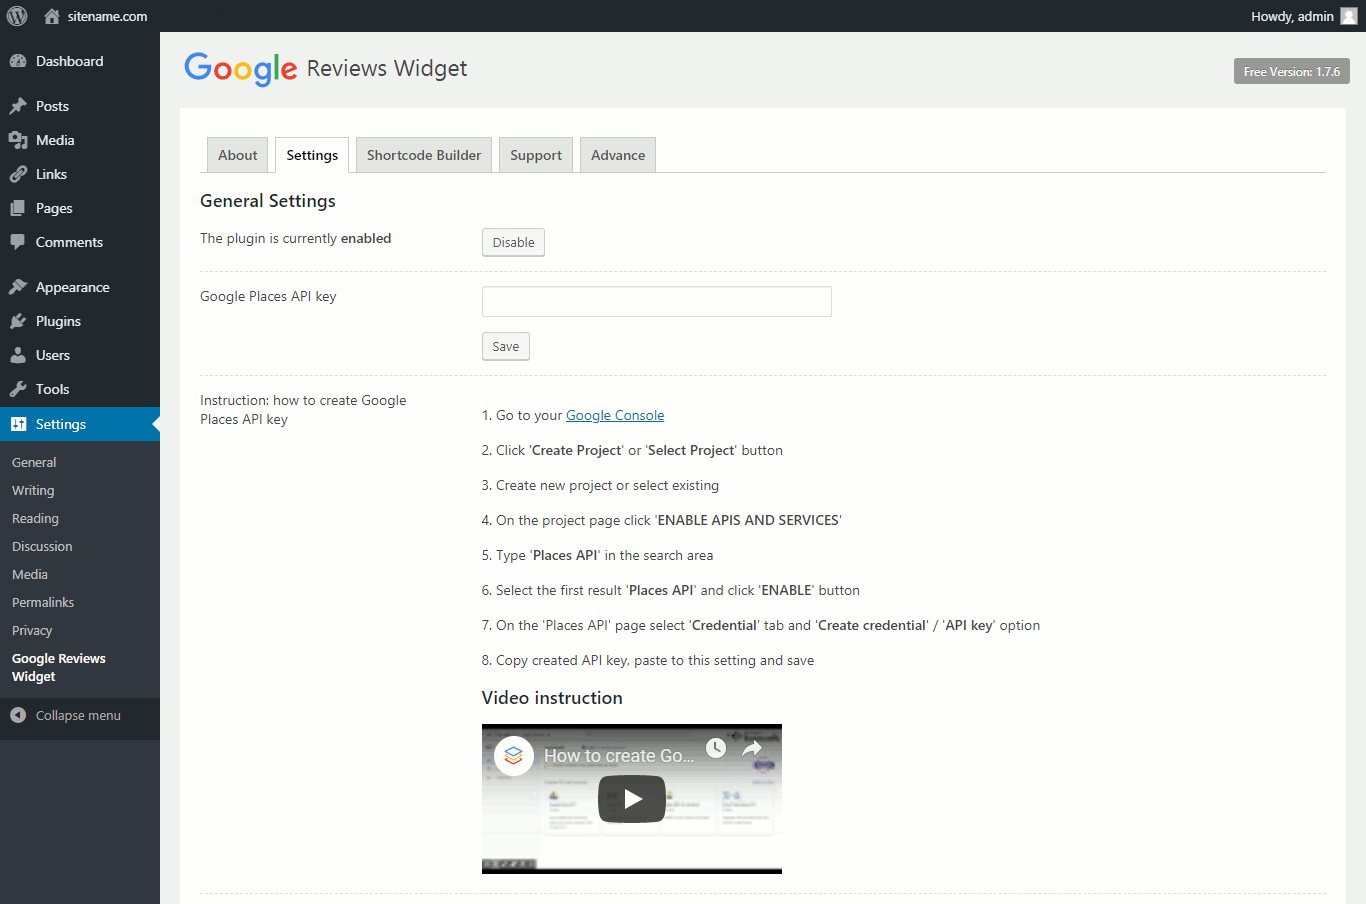 Google Reviews Widget Settings